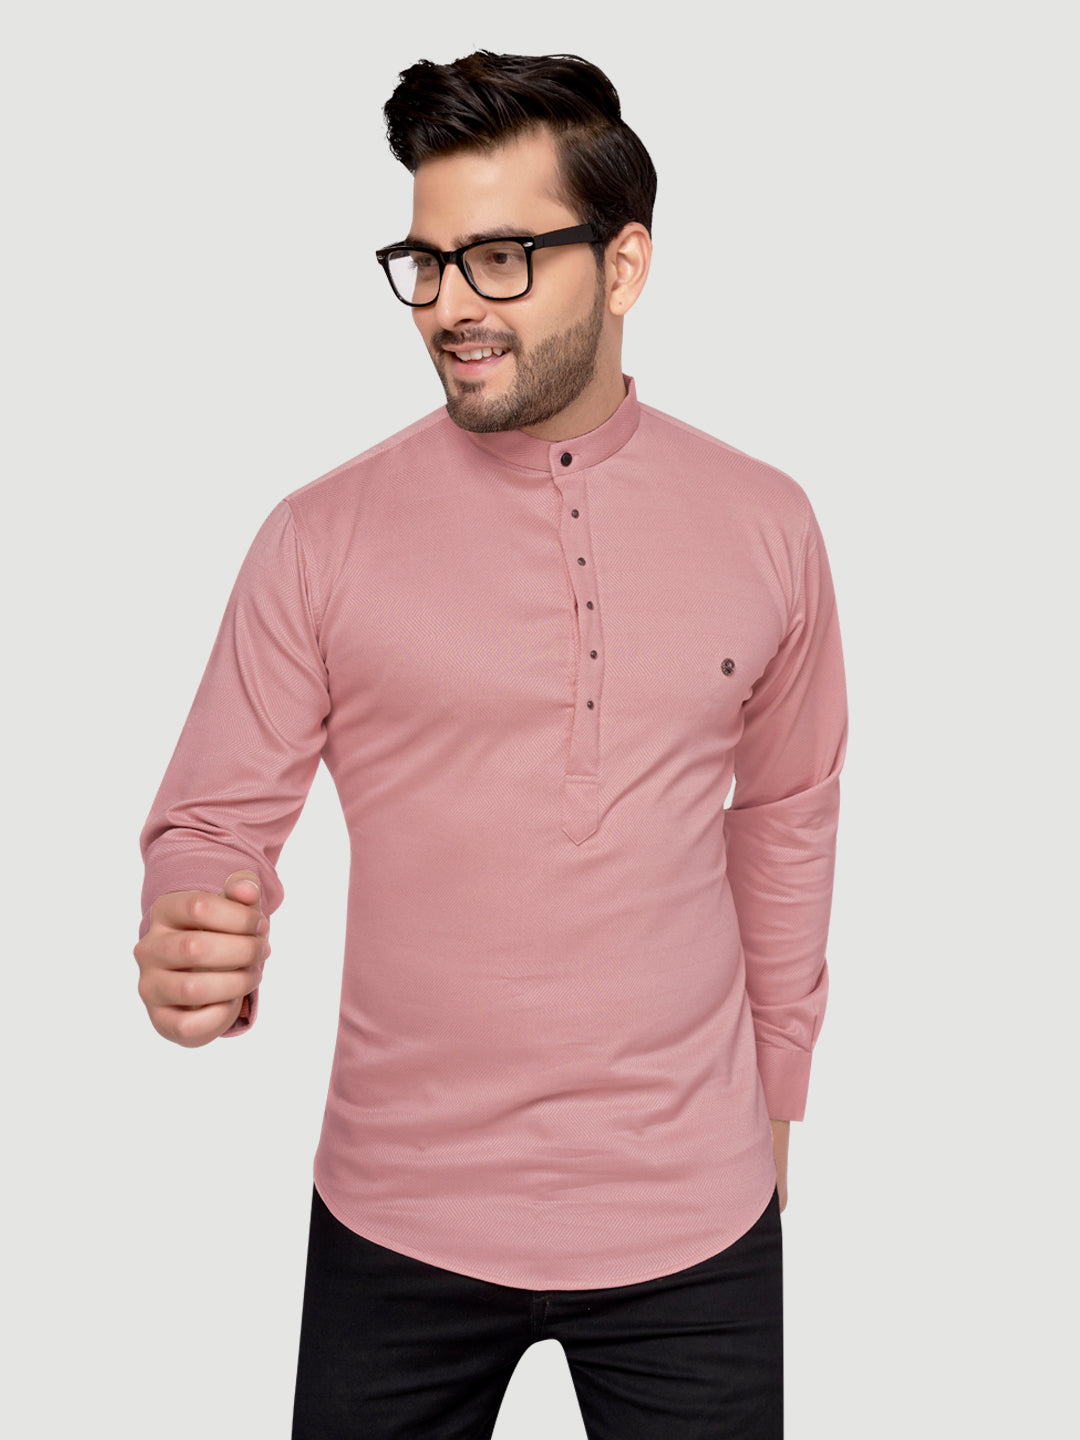 Black and White Shirts Men's Designer Short Kurta with Metal Buttons Salmon Pink